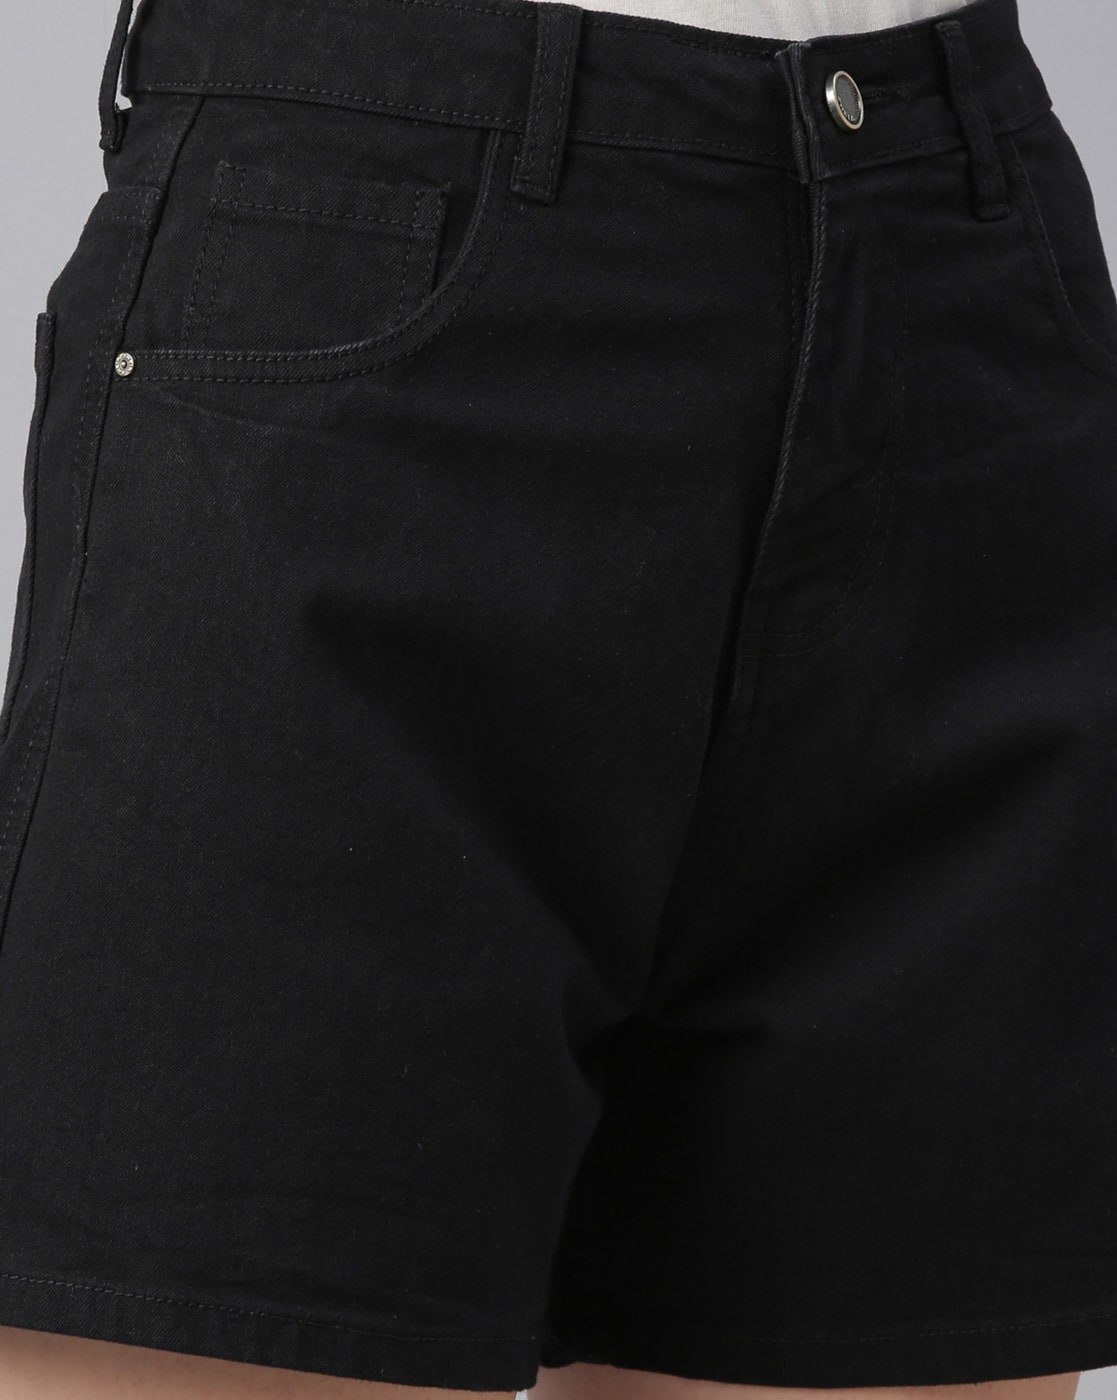 Black Button Up High Waist Denim Shorts - Buy Fashion Wholesale in